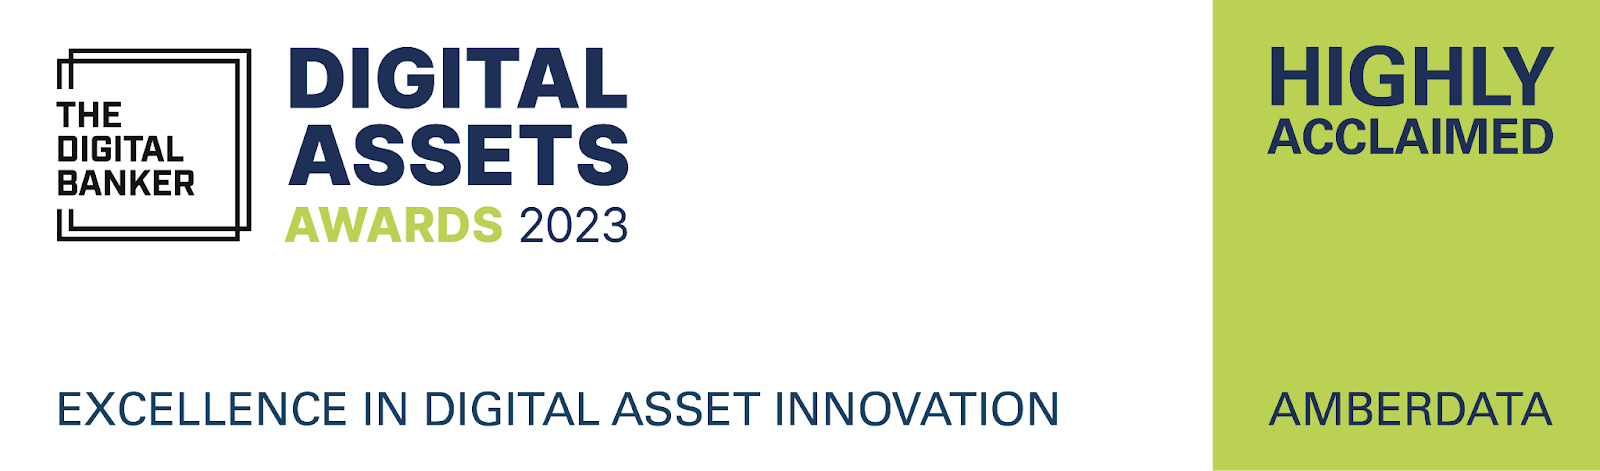 Digital Assets Awards 2023 Excellance in digital asset innvovation - amberdata